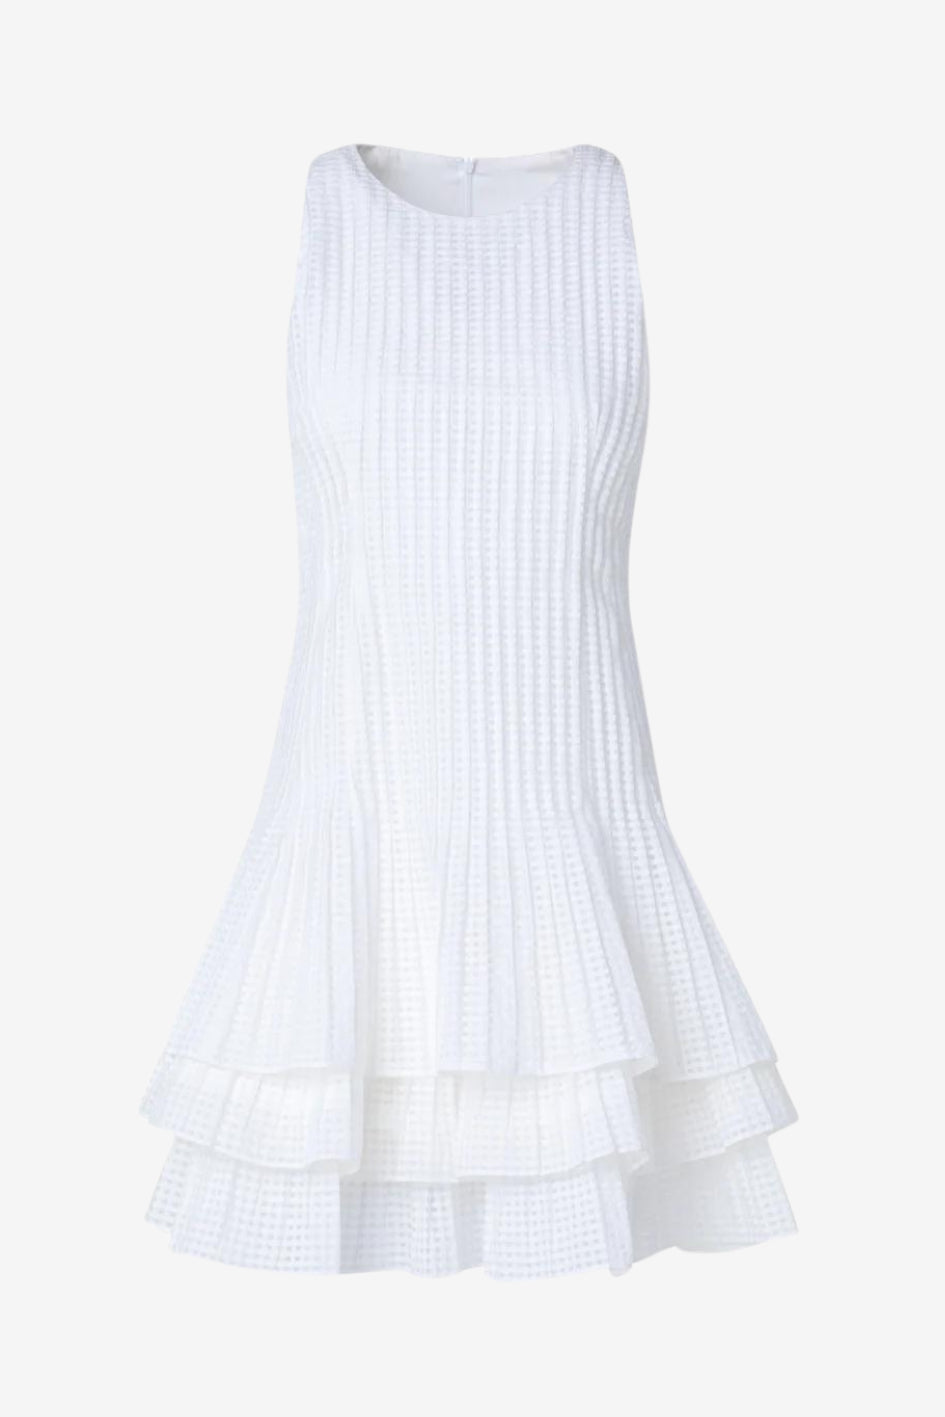 Kurzes ärmelloses Kleid mit Faltenrock aus leicht transparentem Organza